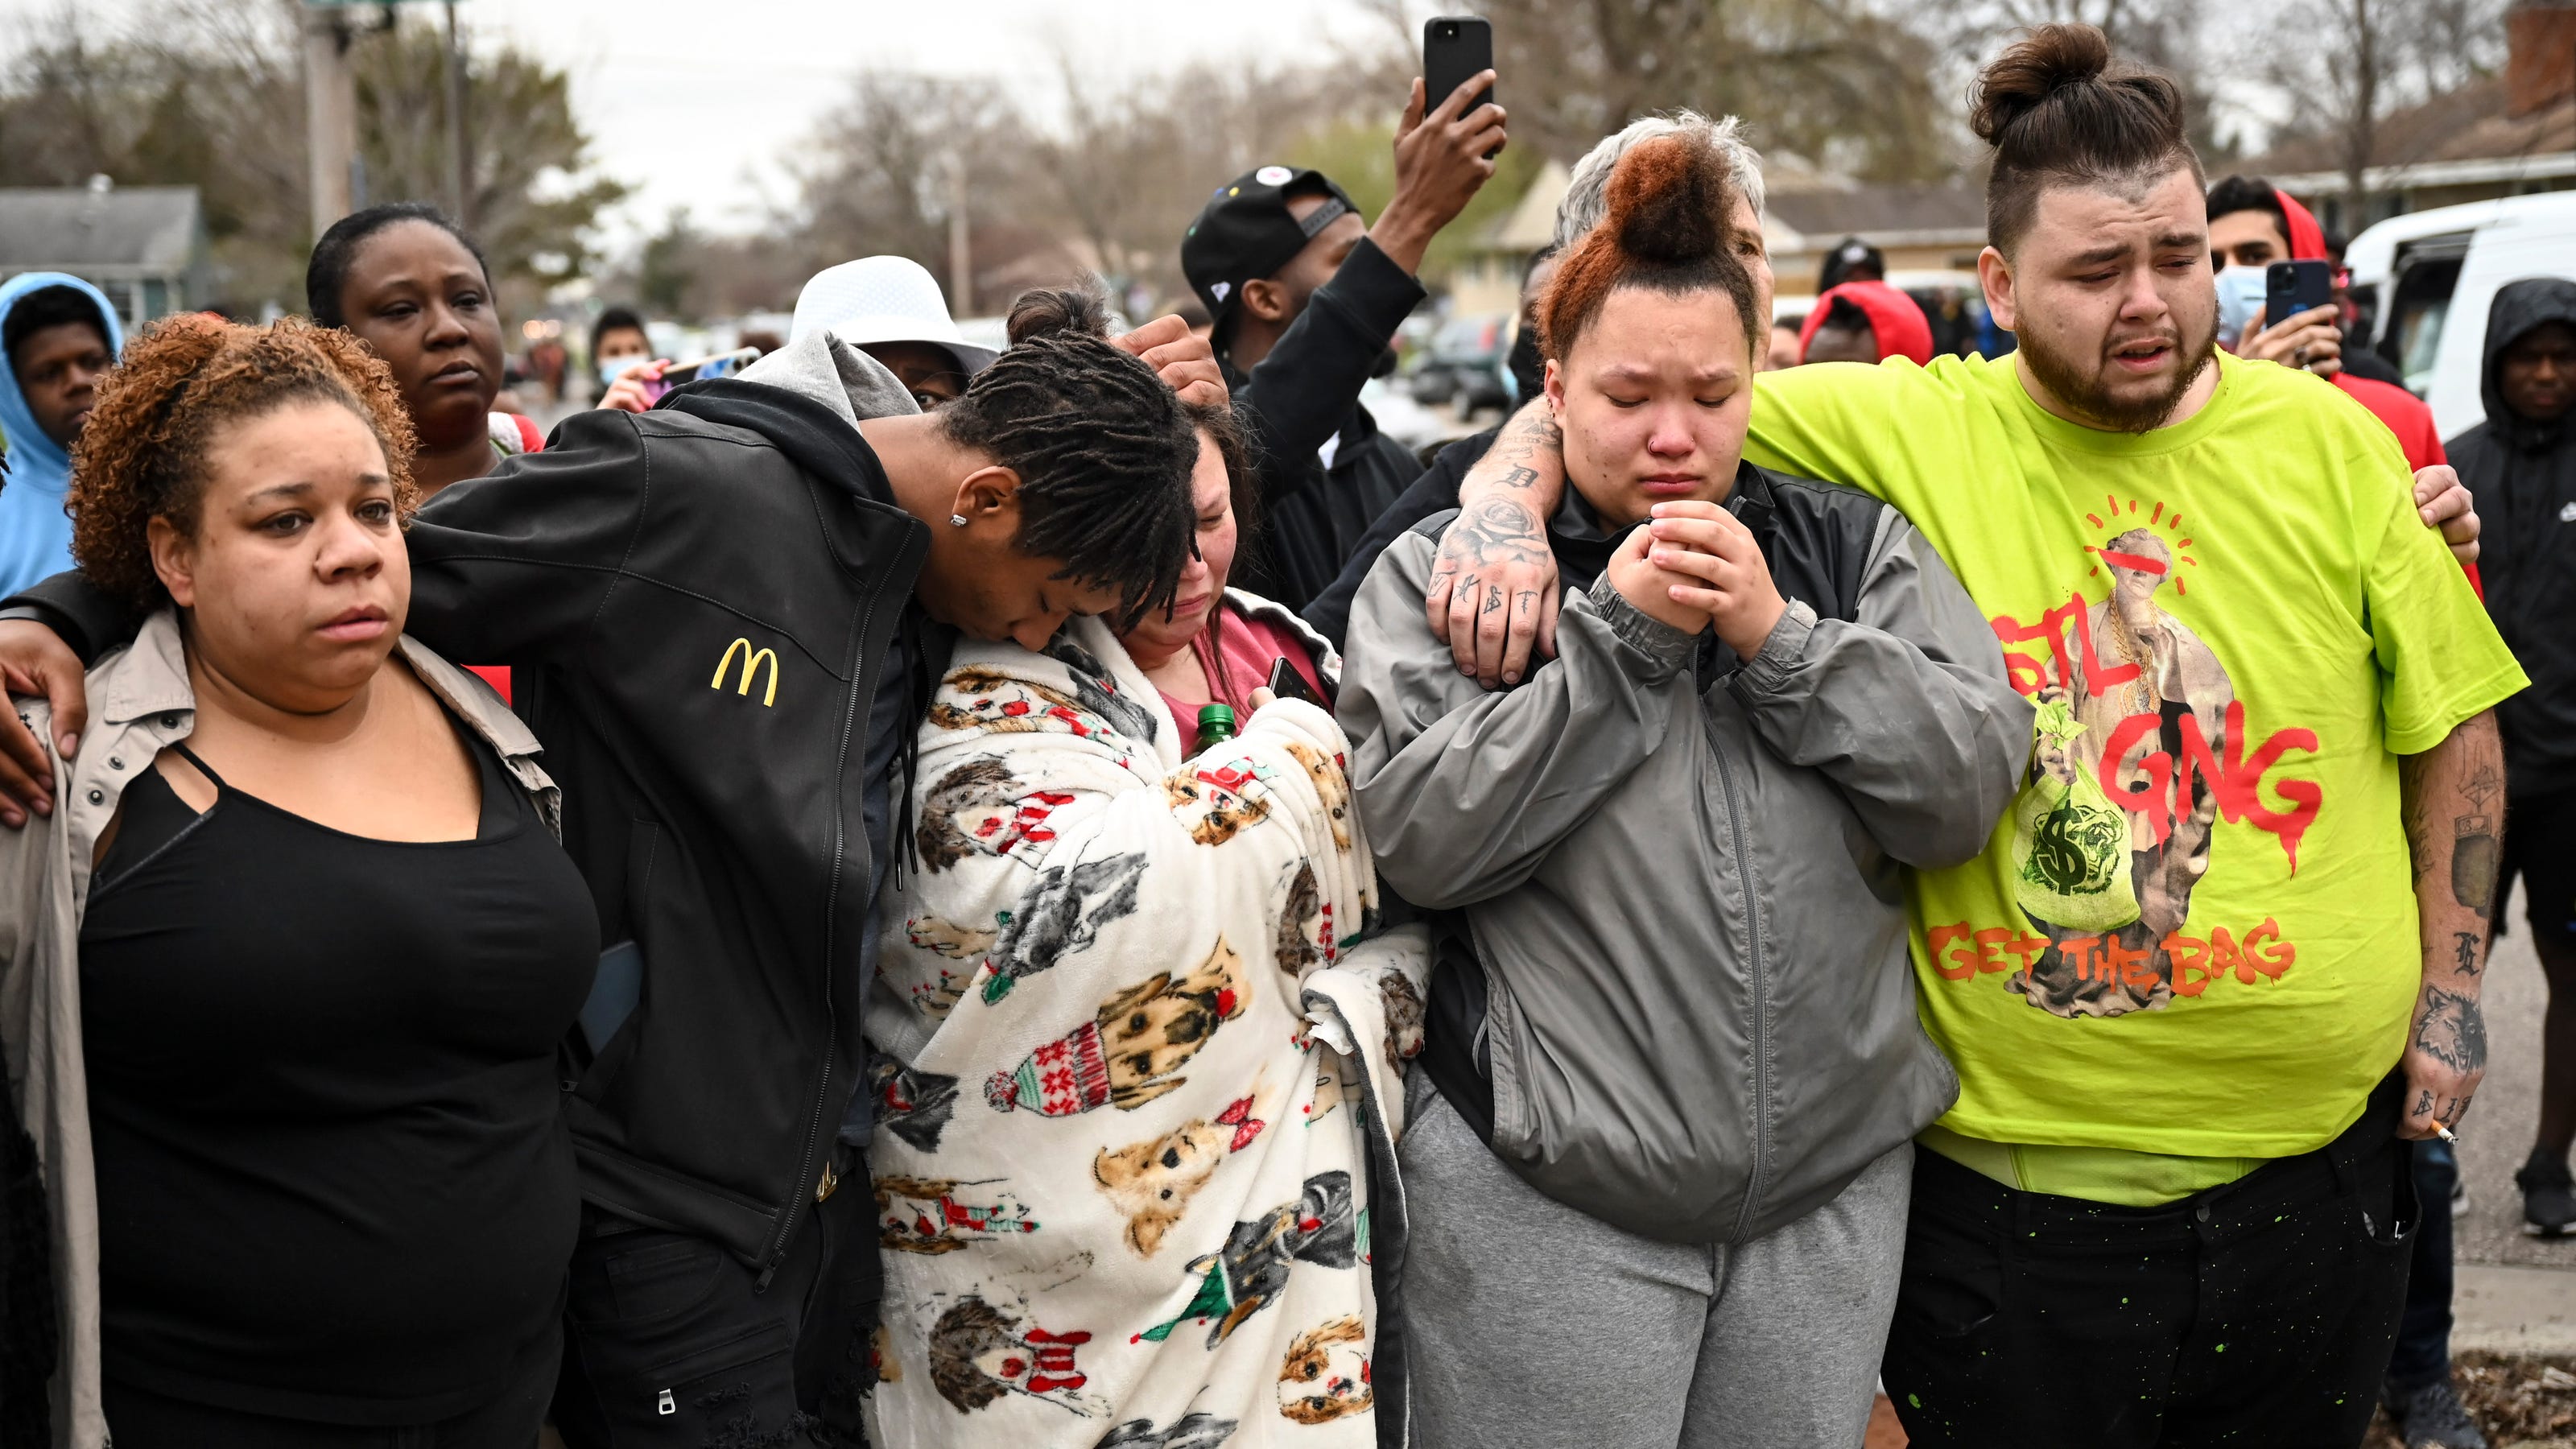 Despair is real among Black, brown Americans as police 'mistakes' persist, Daunte Wright killed